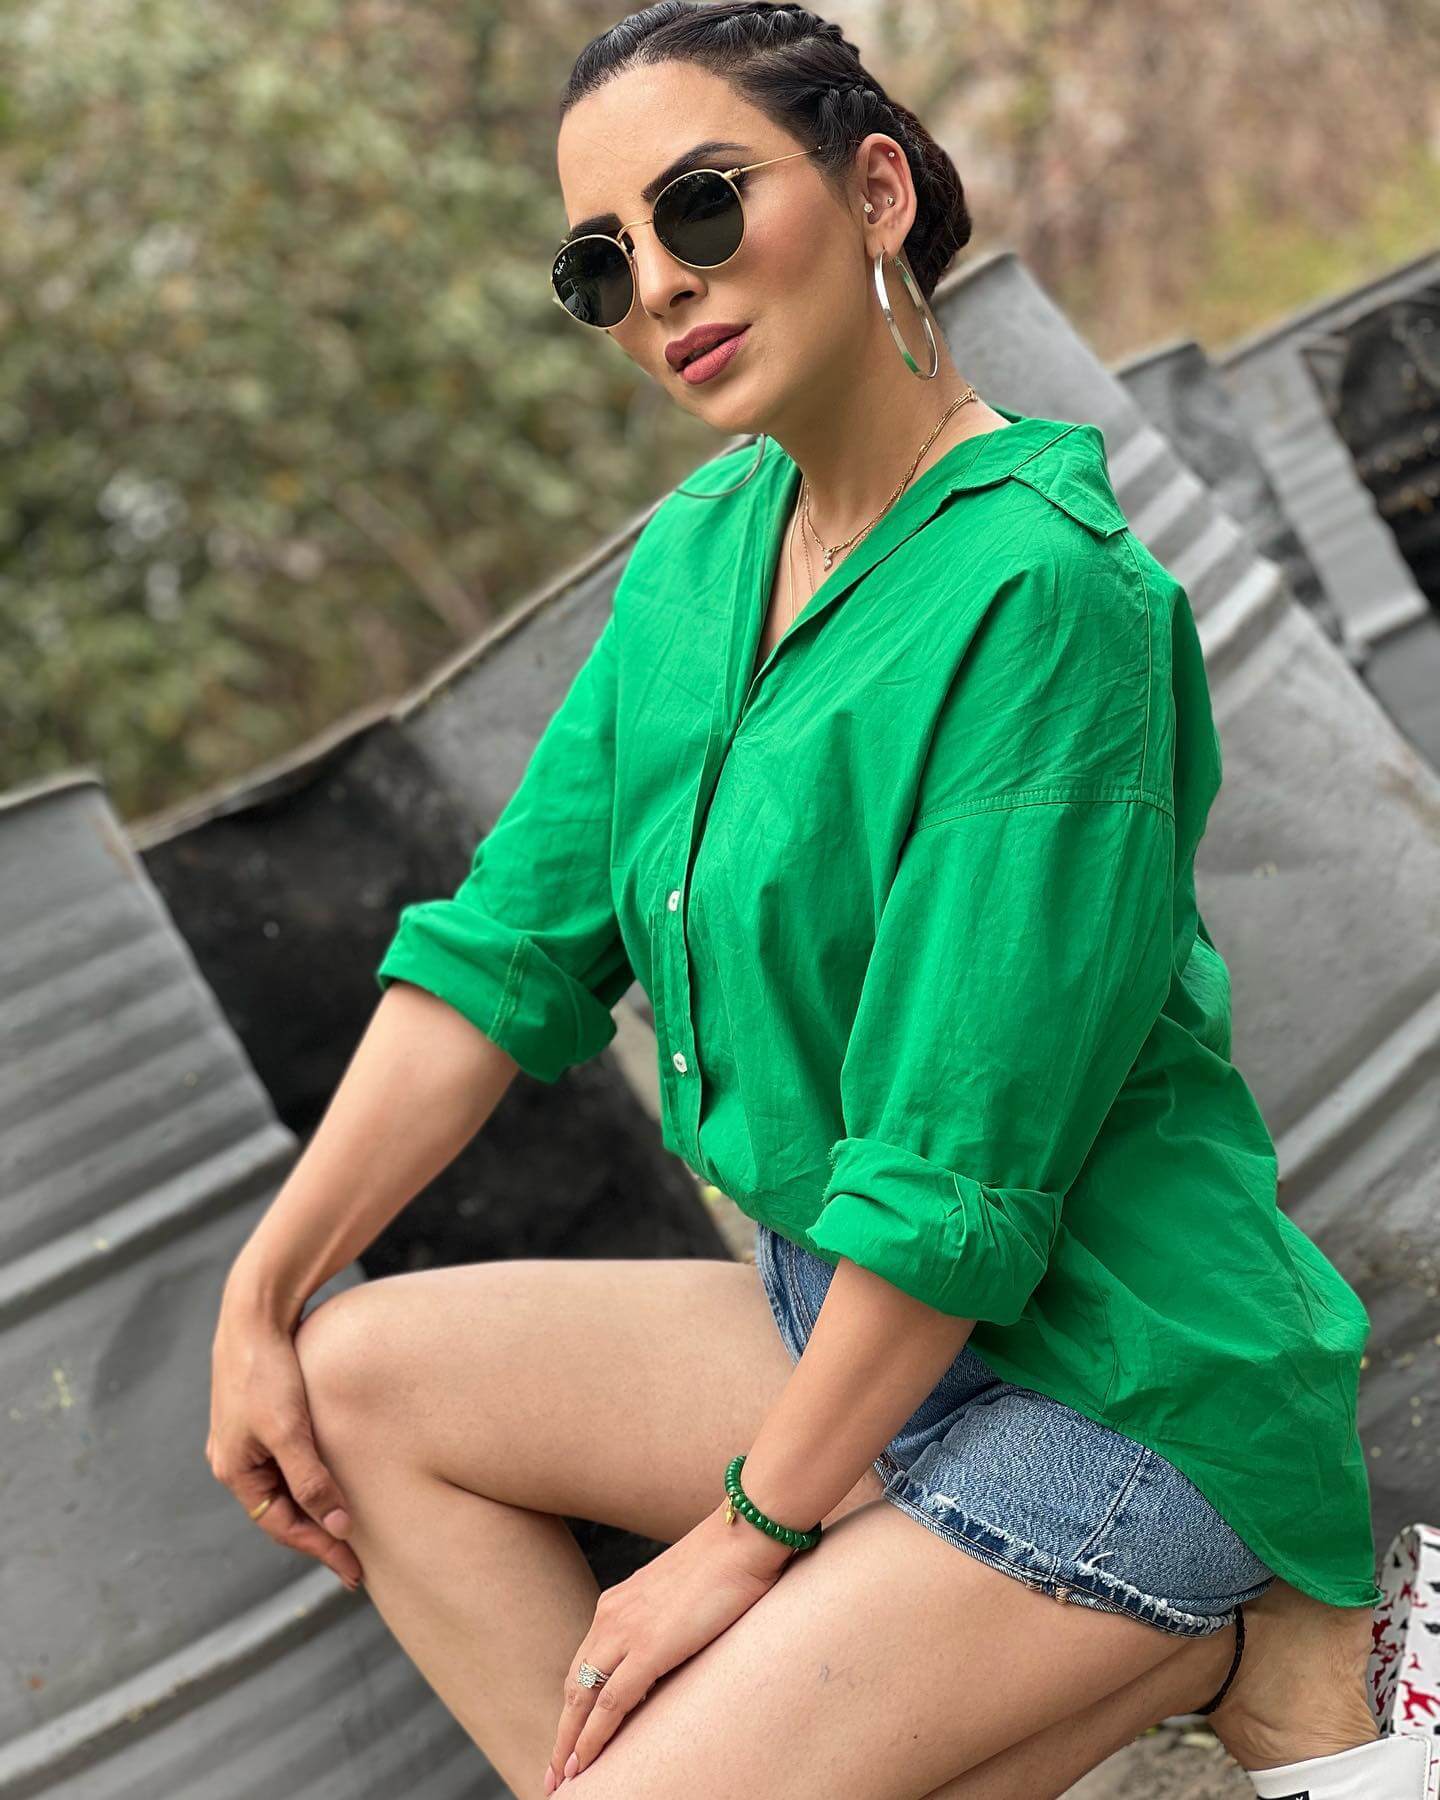 Actress Mansi Sharma in green shirt and jeans shorts